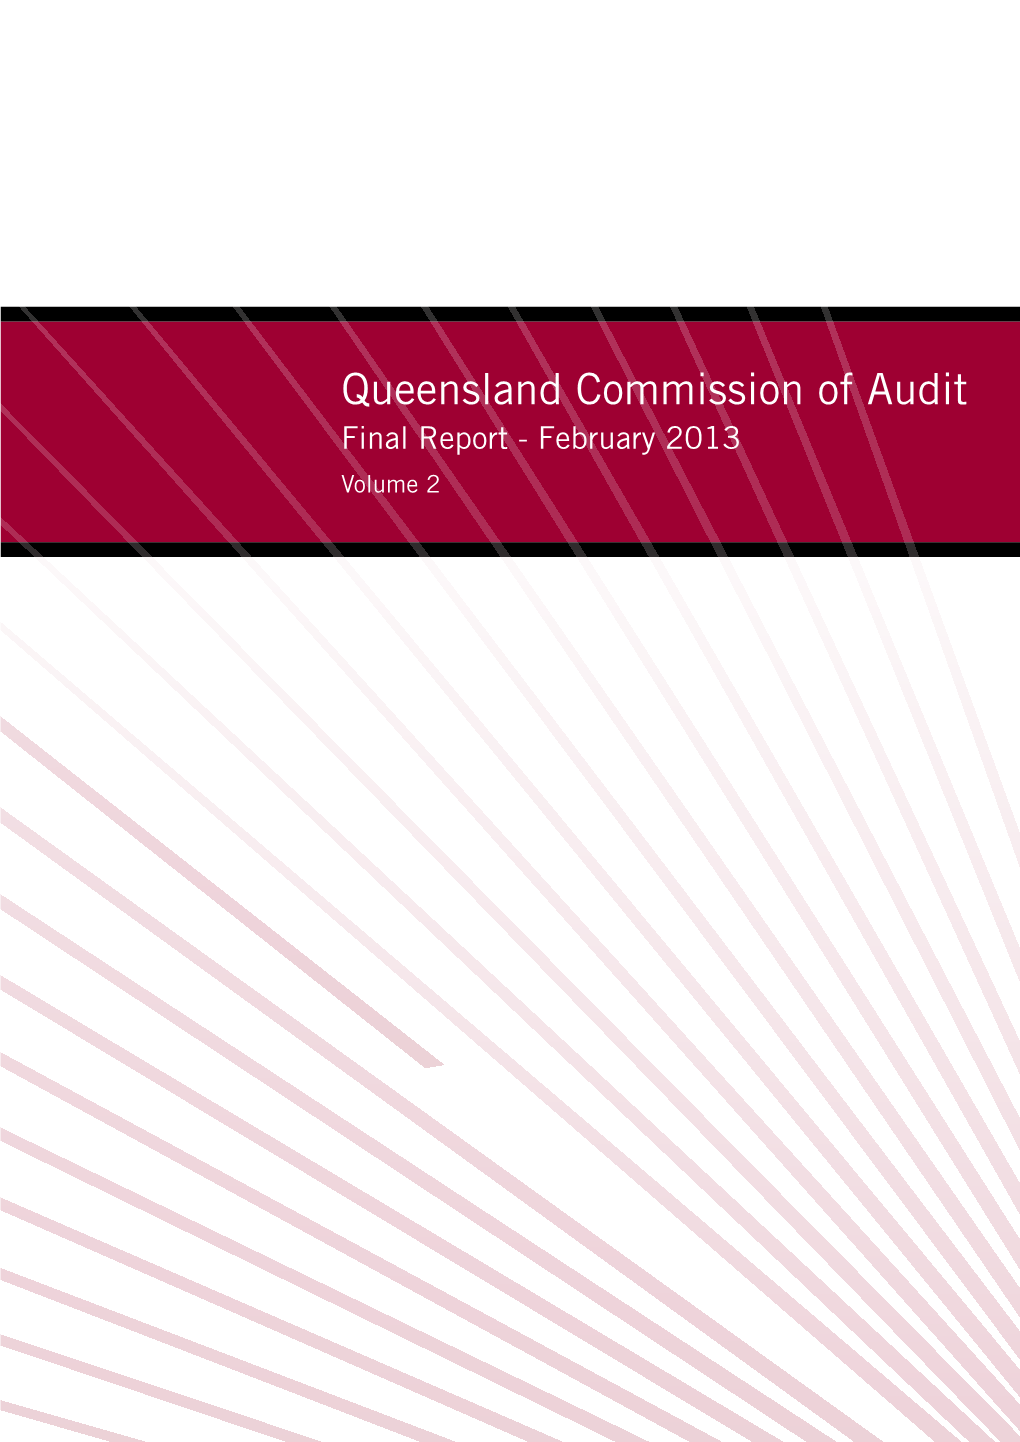 Queensland Commission of Audit's Final